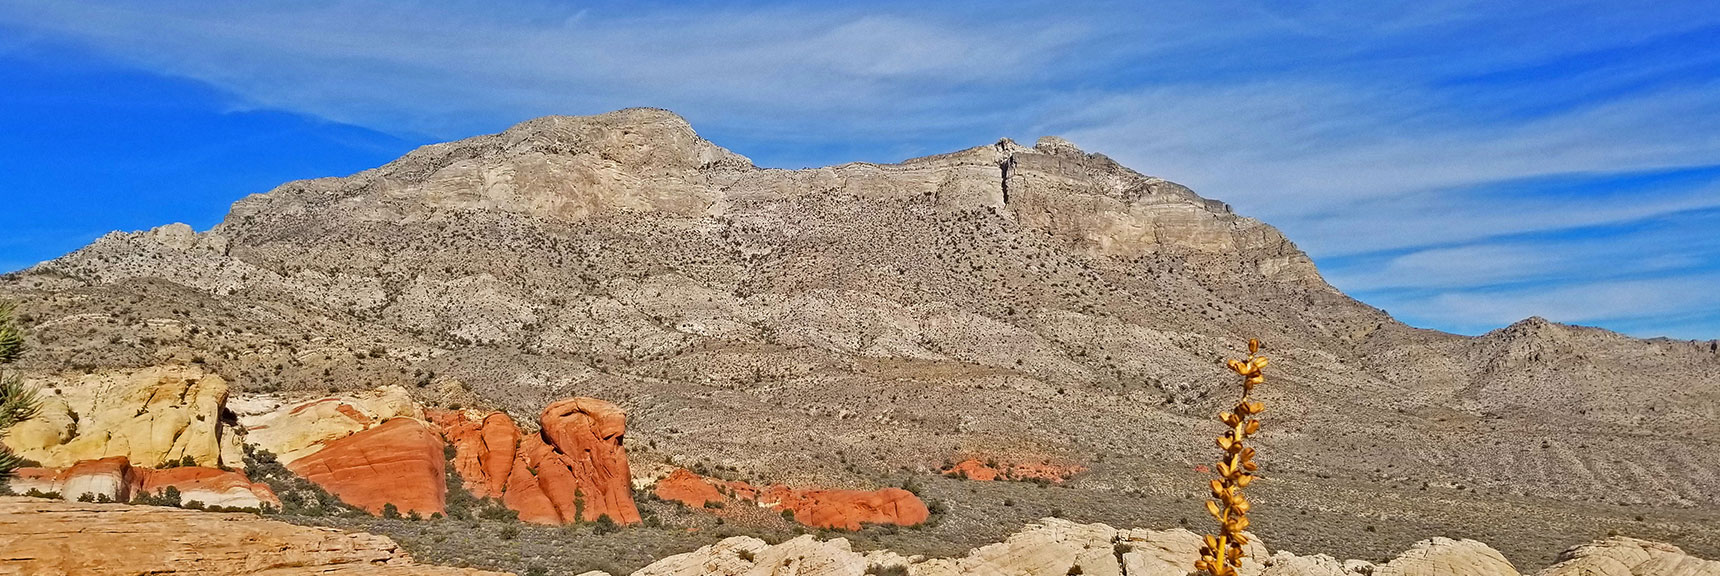 Damsel Peak as Backdrop to Brownstone Basin Jurassic Red Rock | Kraft Mountain, Gateway Canyon Loop, Calico Basin, Nevada